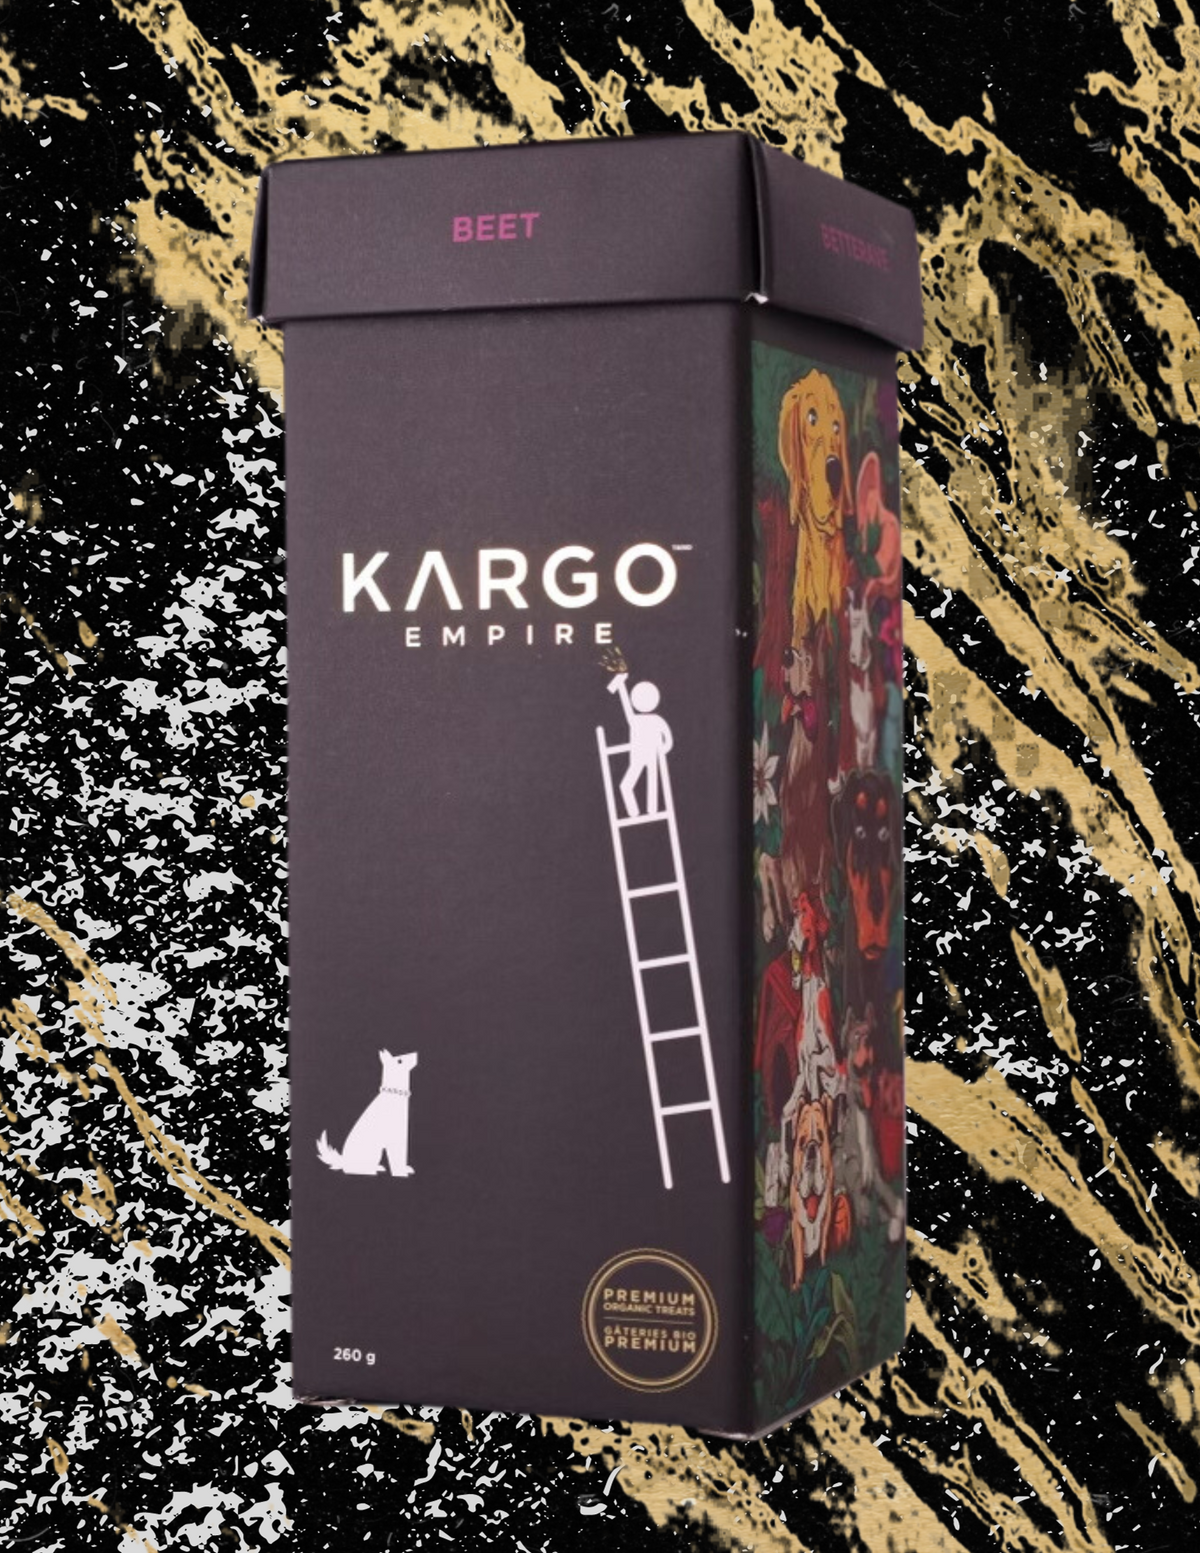 Kargo Empire Beet Treats